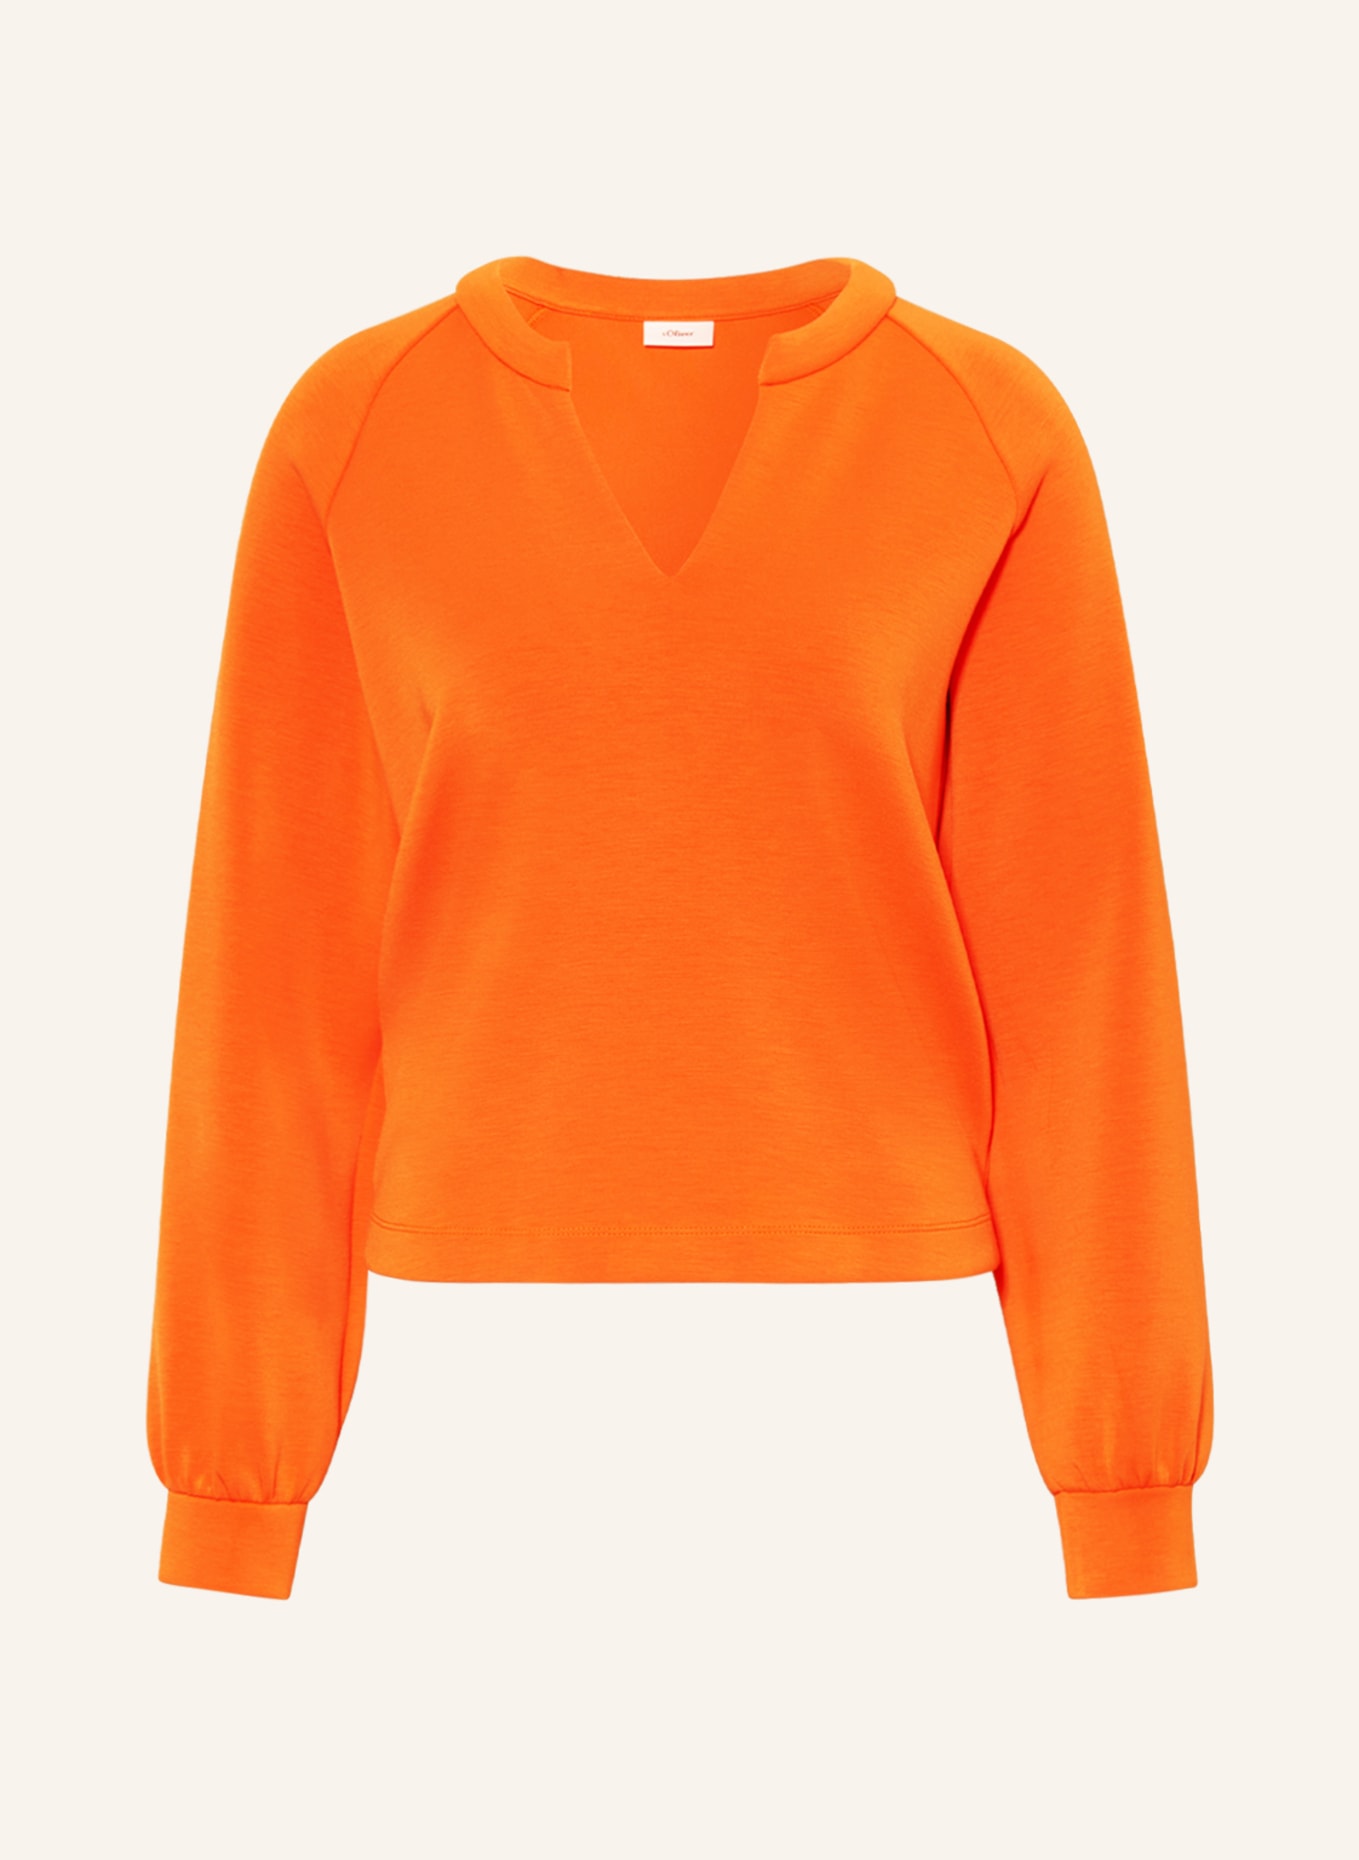 Sweatshirt in LABEL BLACK orange s.Oliver